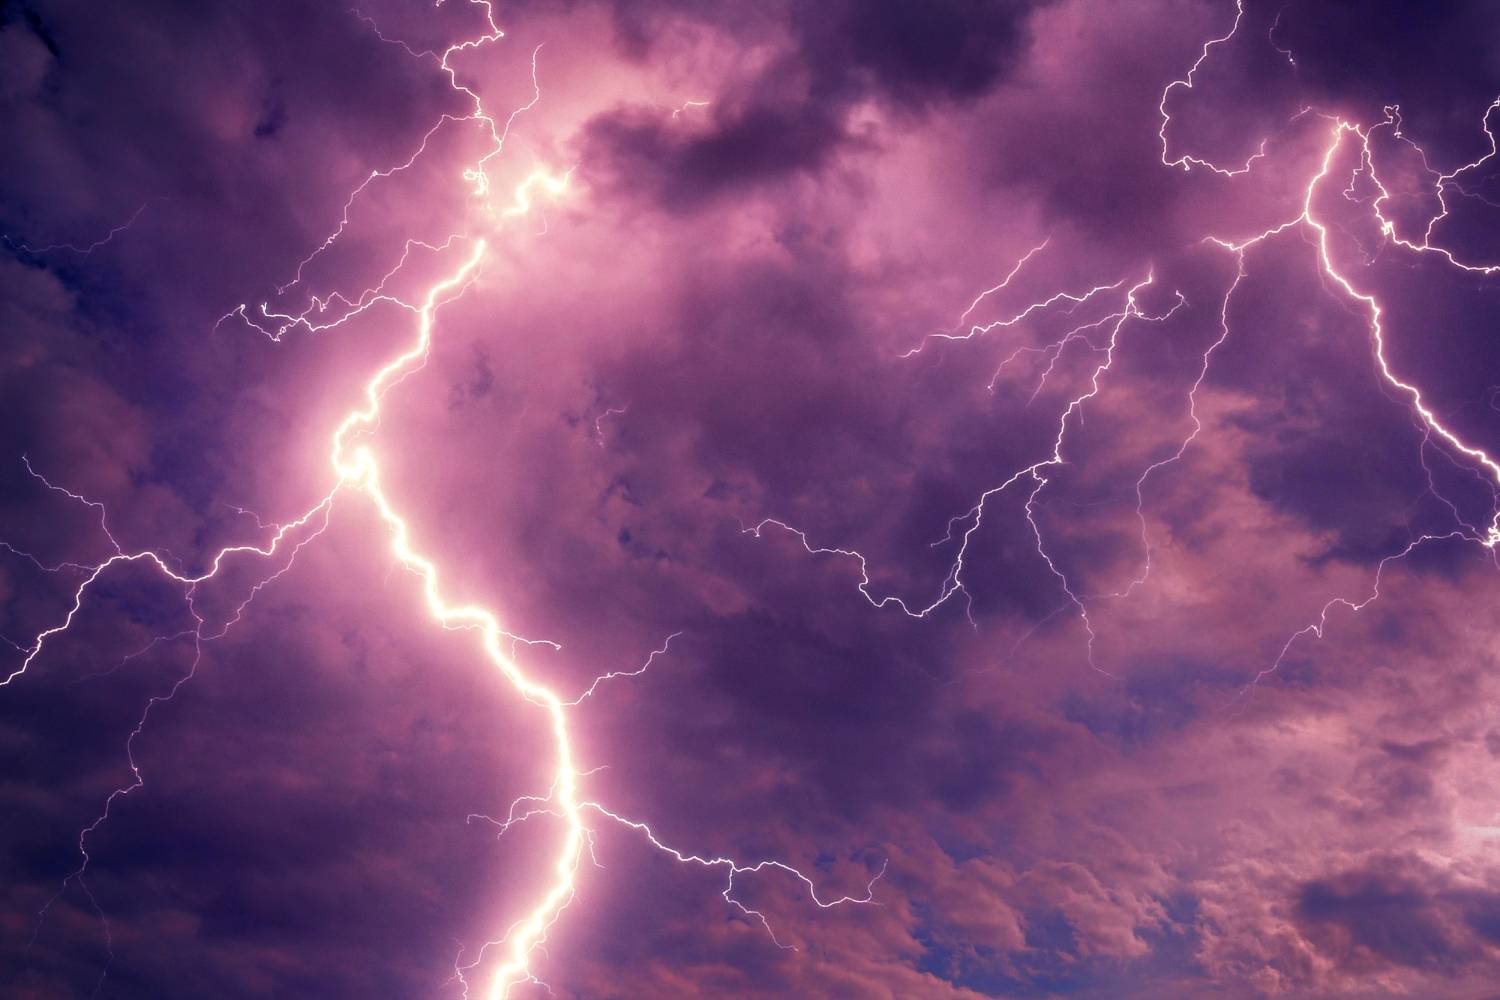 Dramatic lightning in purple skies, a stunning display of Panama City weather phenomena.